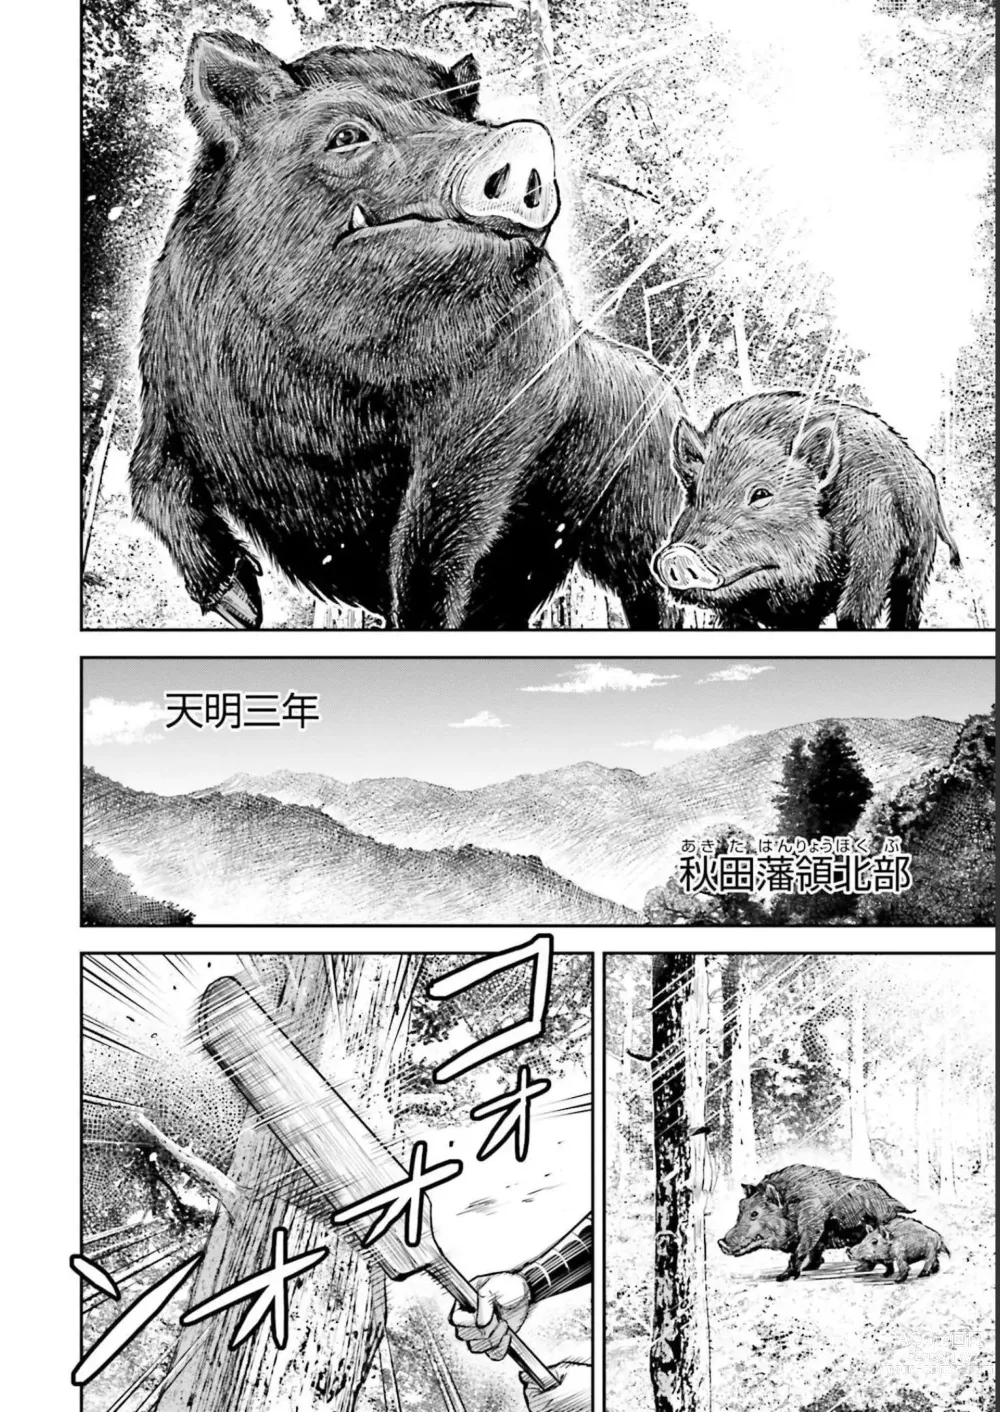 Page 8 of manga Sarumane Vol. 1